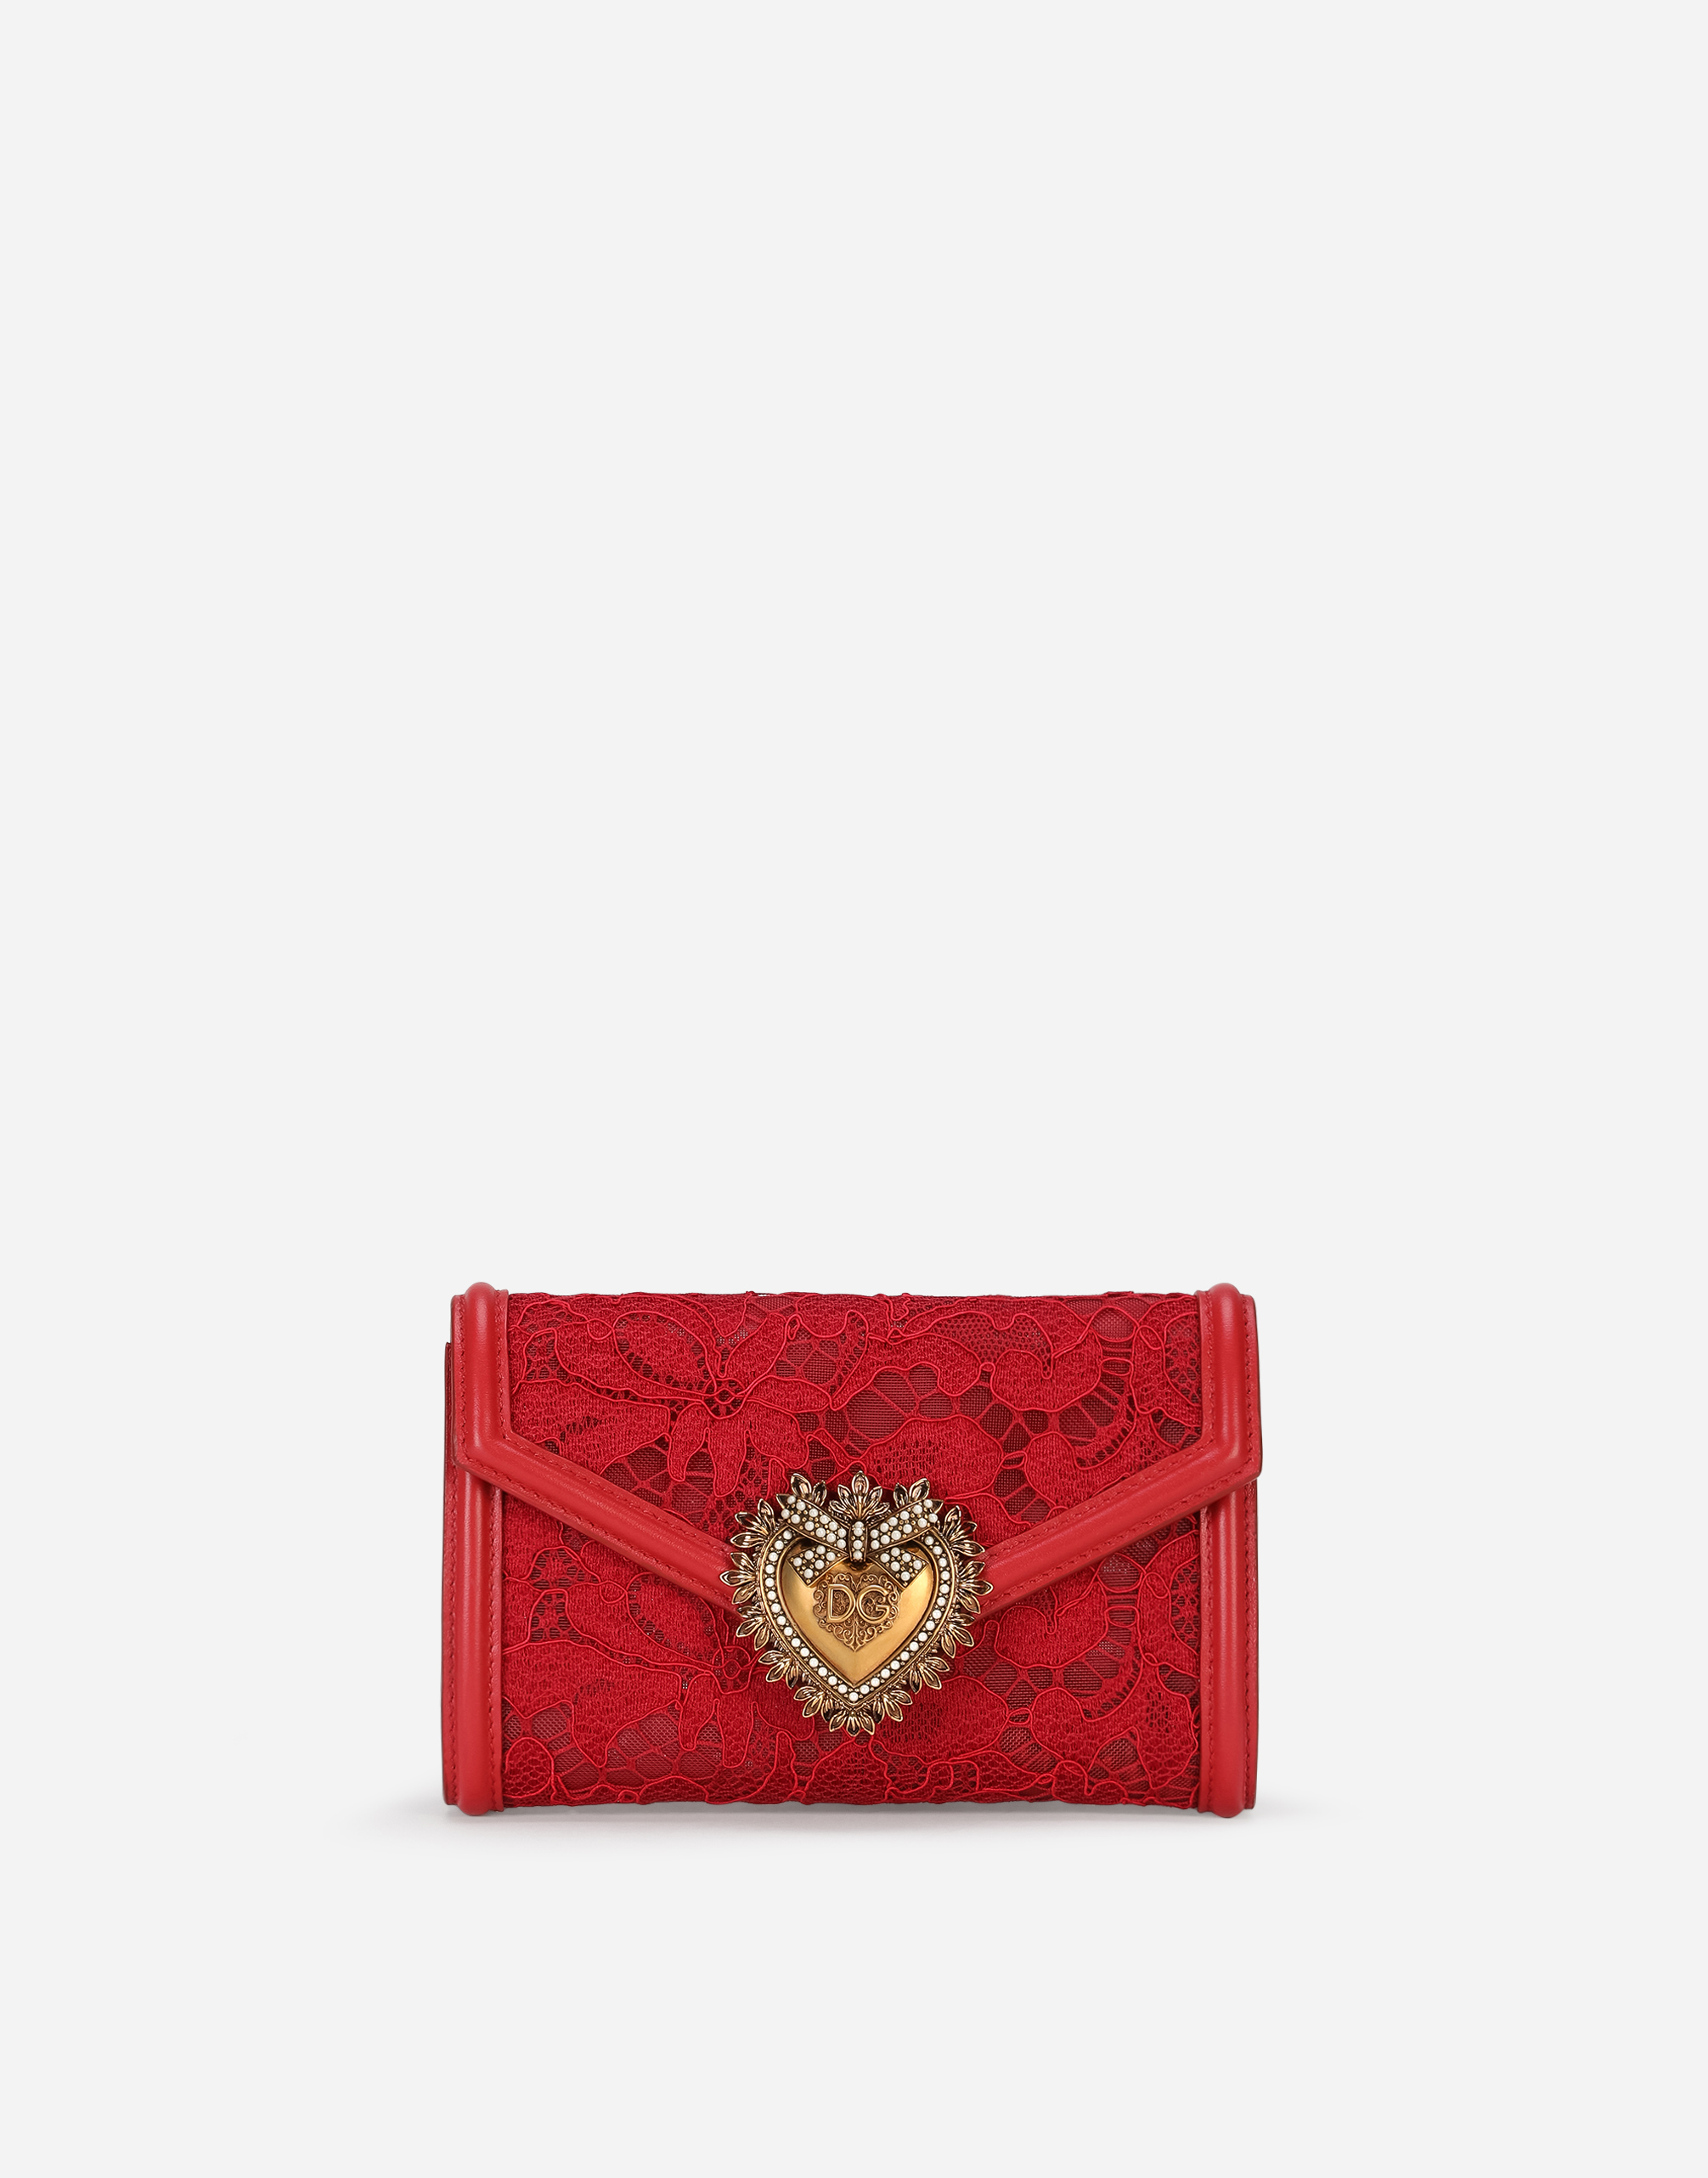 Lace Devotion mini bag in Red